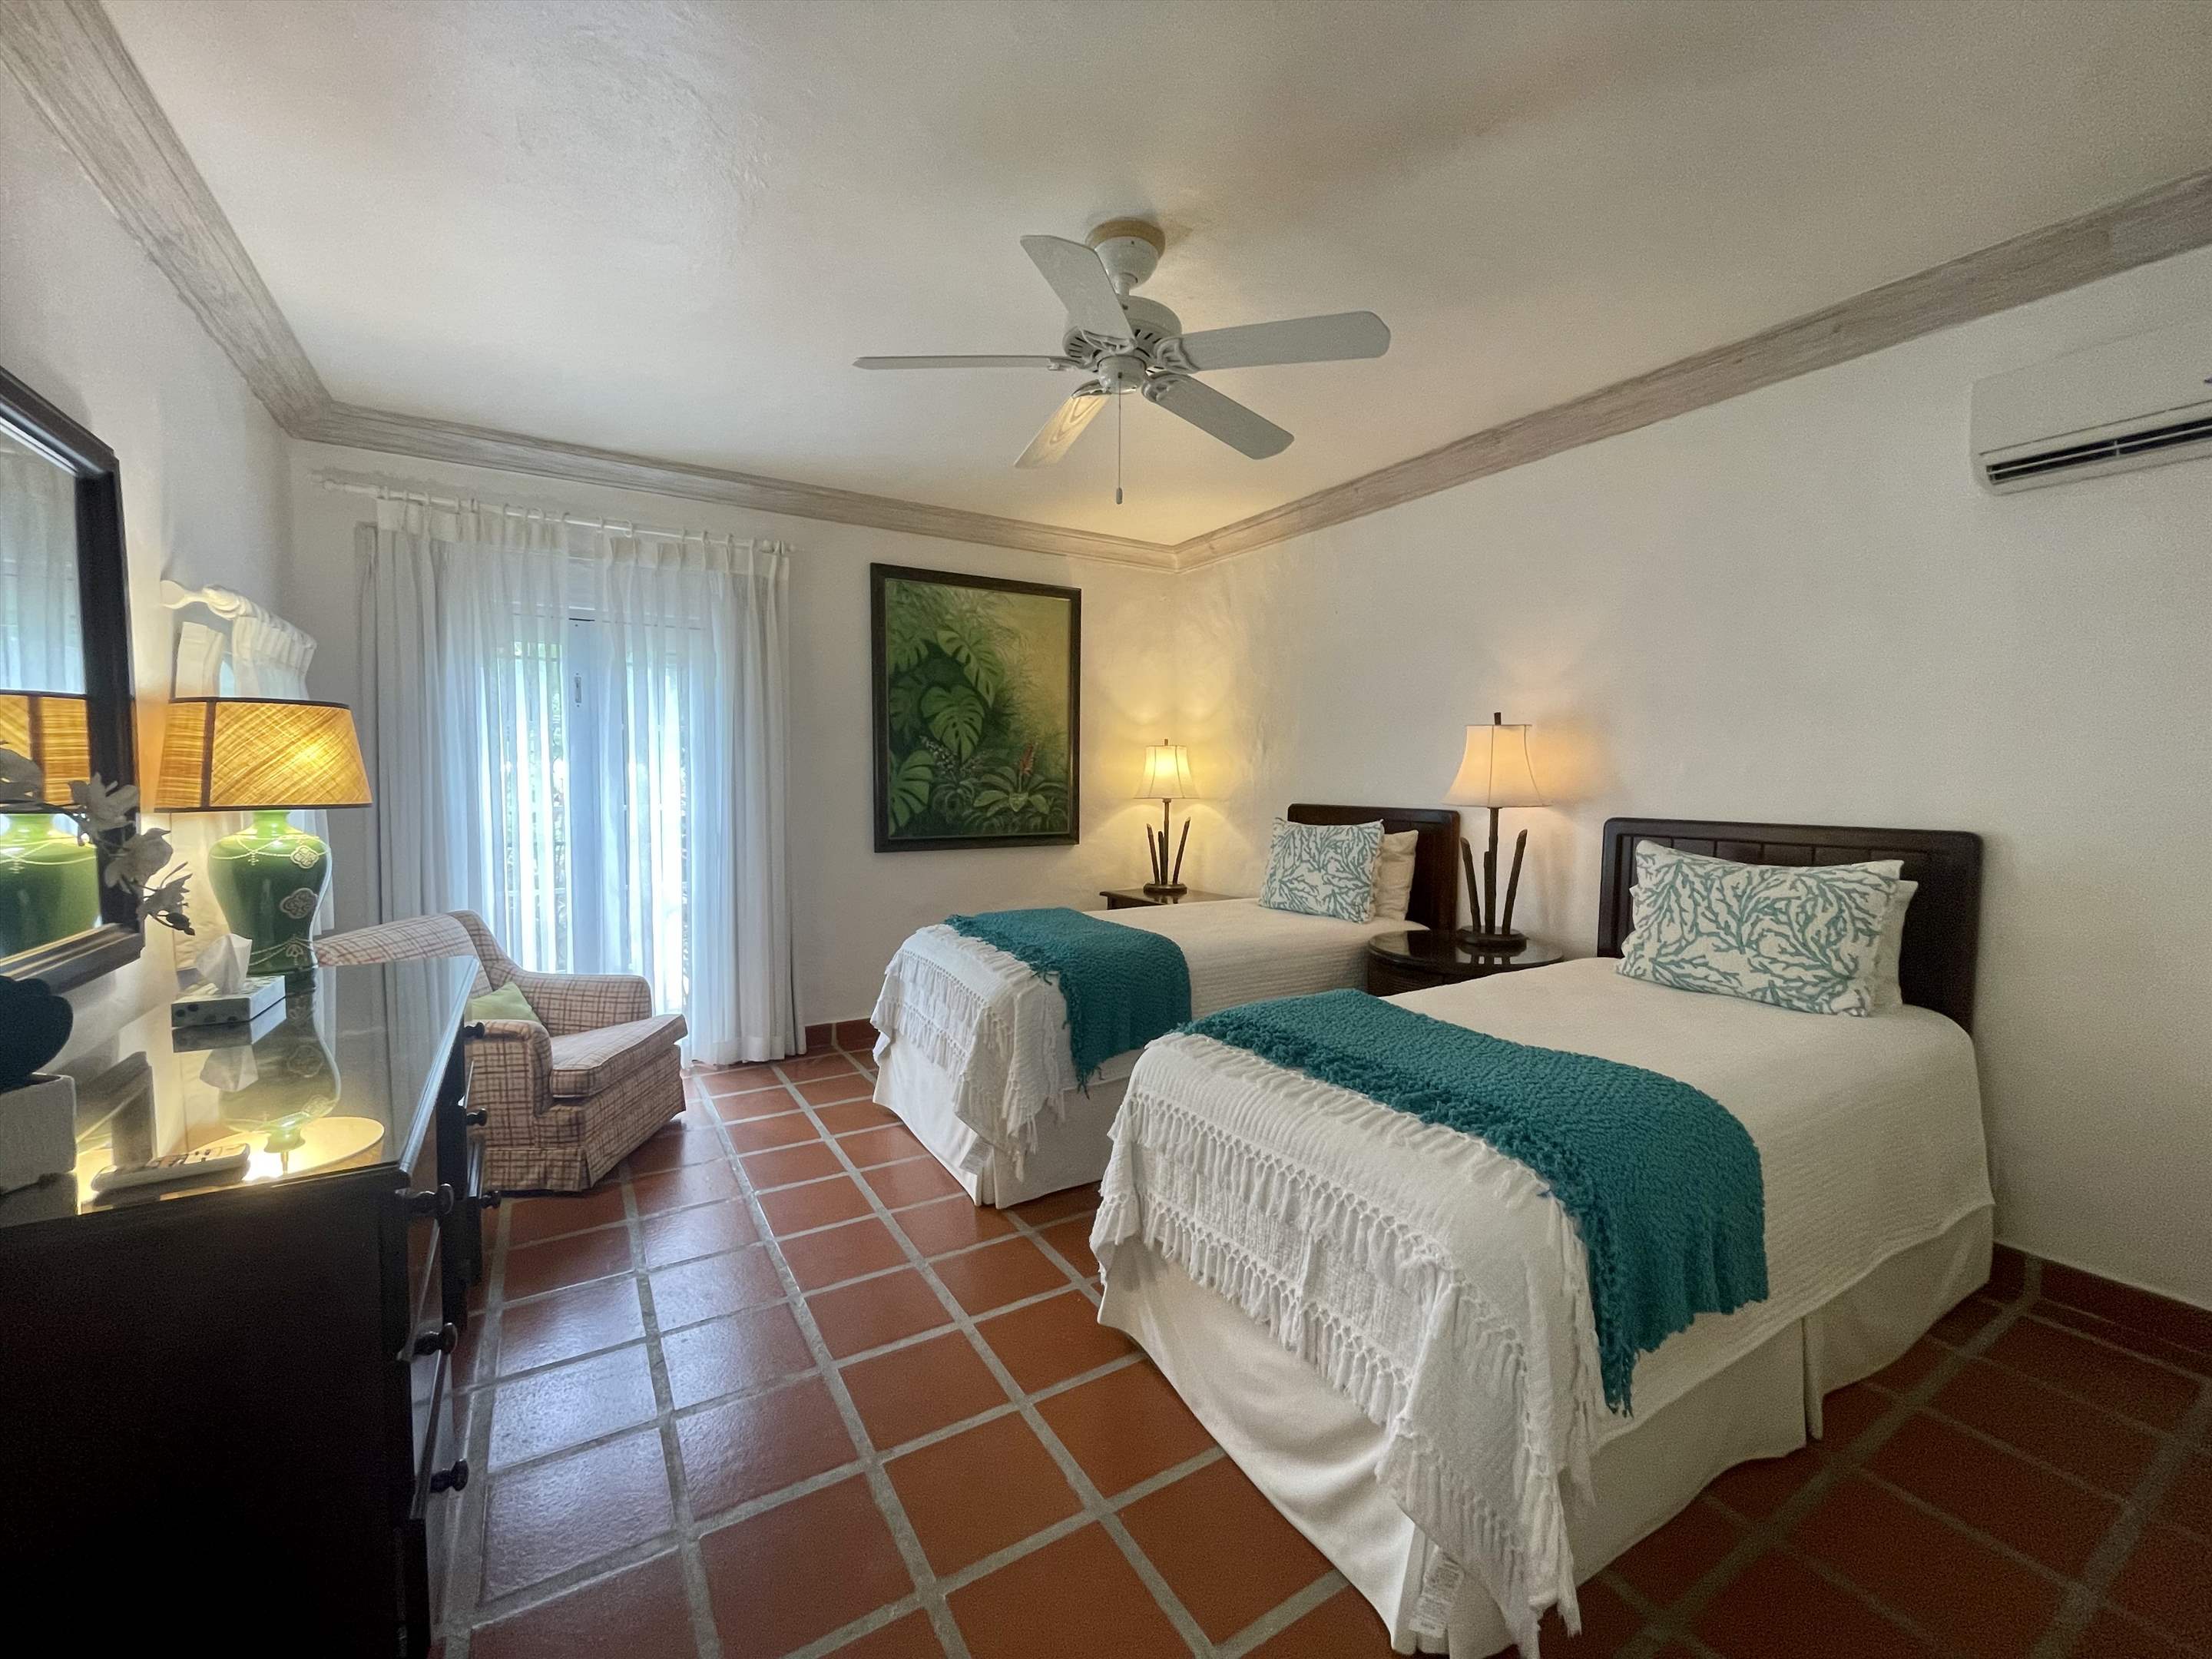 Glitter Bay 102, St James, 2 bedroom, 2 bedroom apartment in St. James & West Coast, Barbados Photo #11